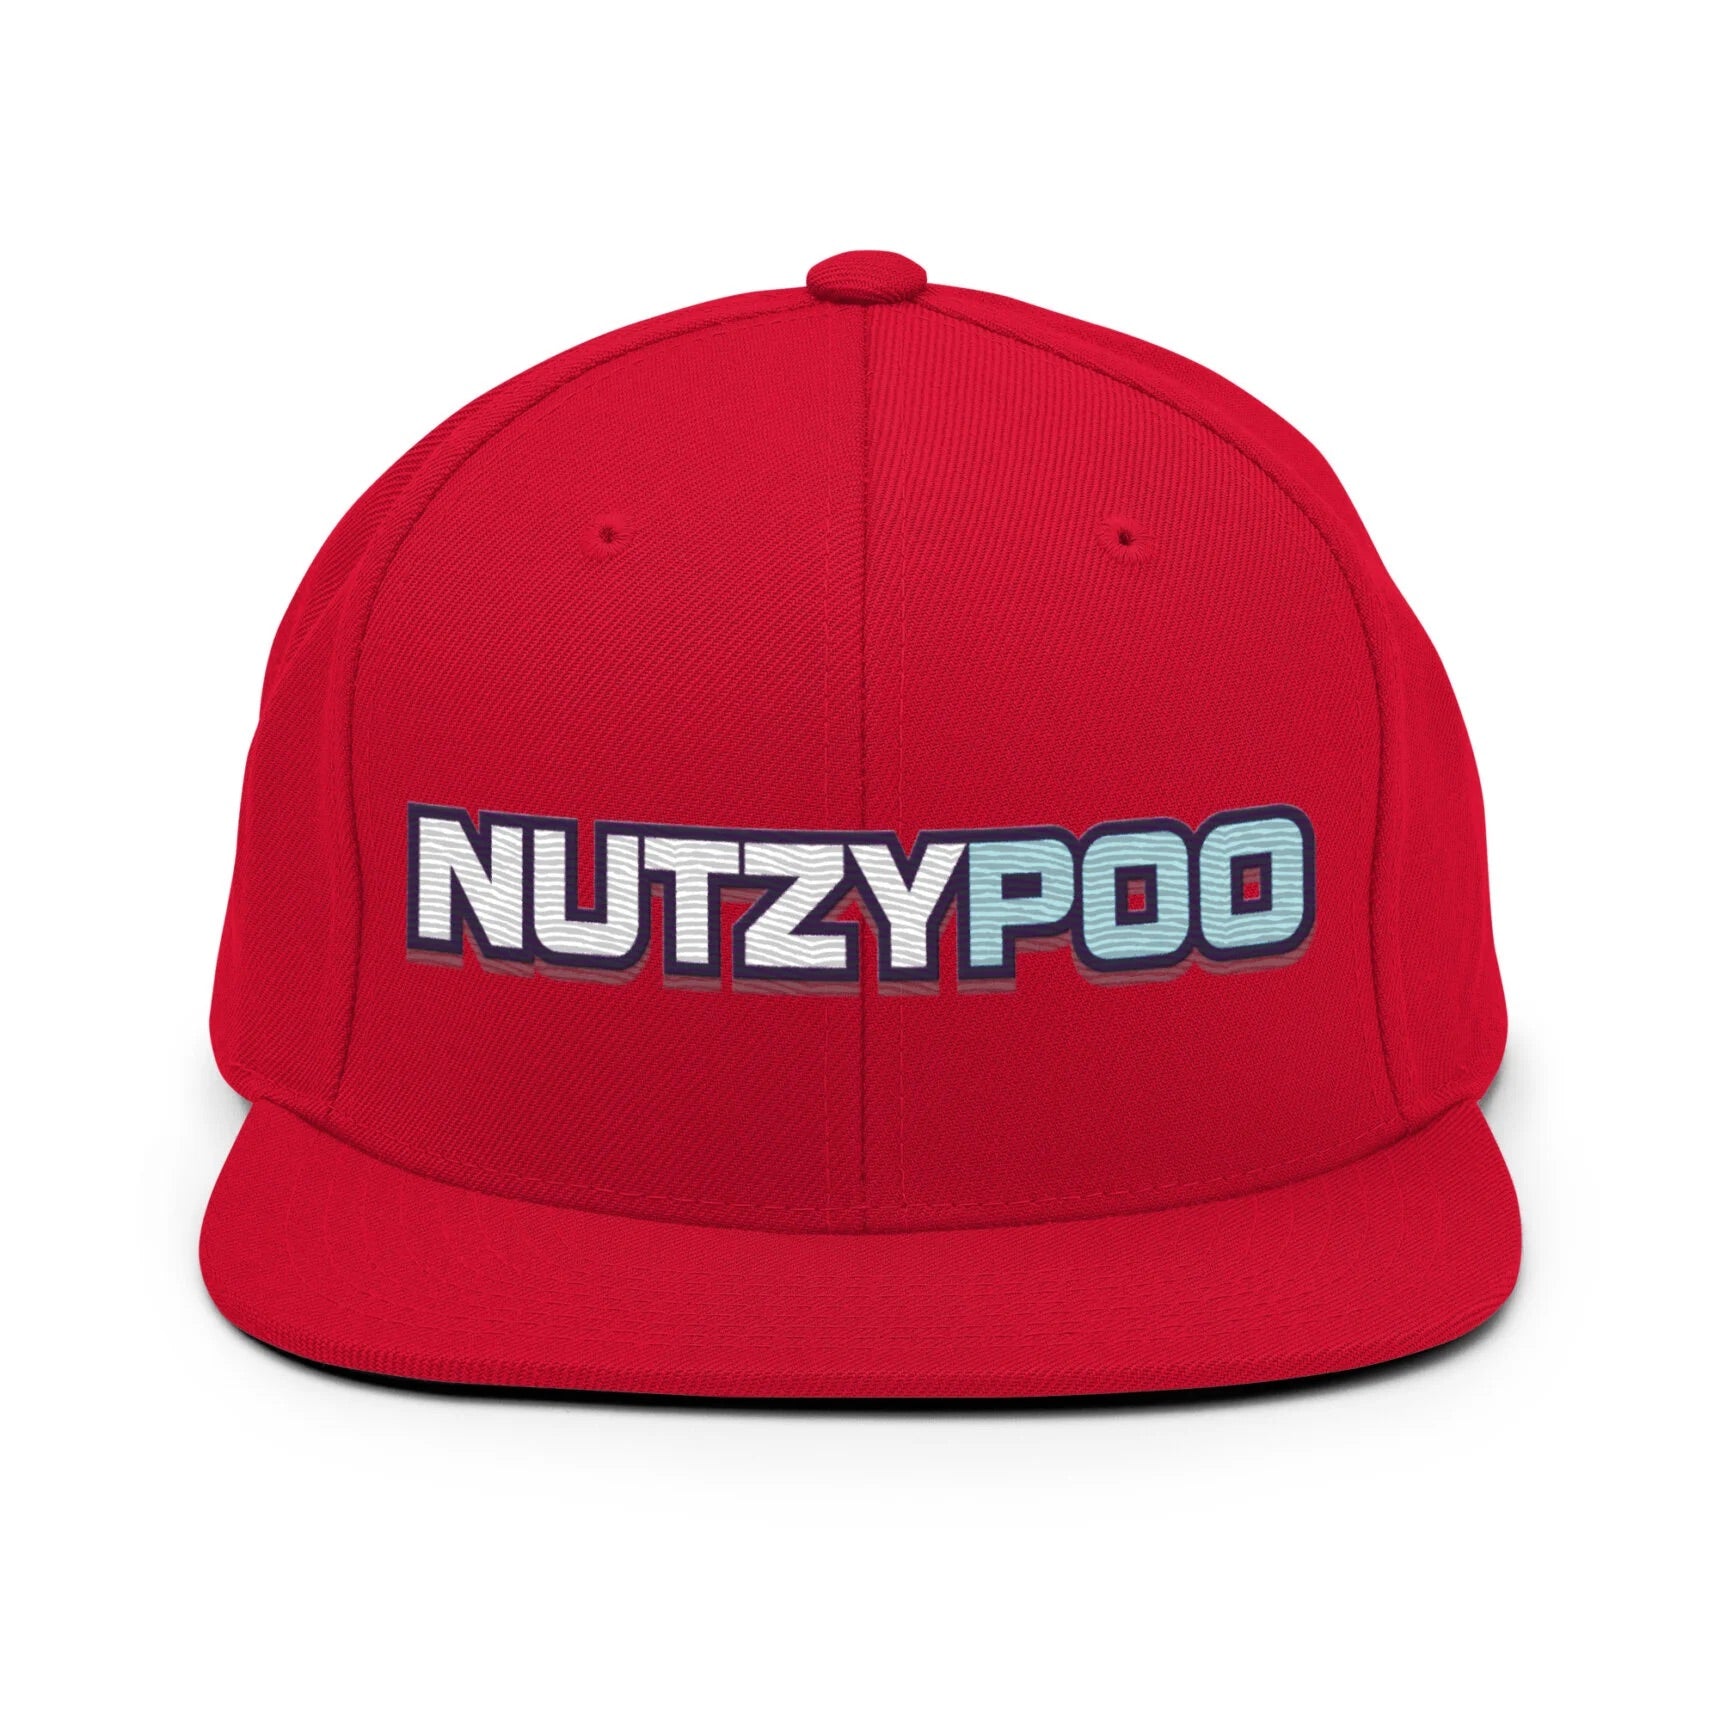 NutzyPoo ShowZone hat in red